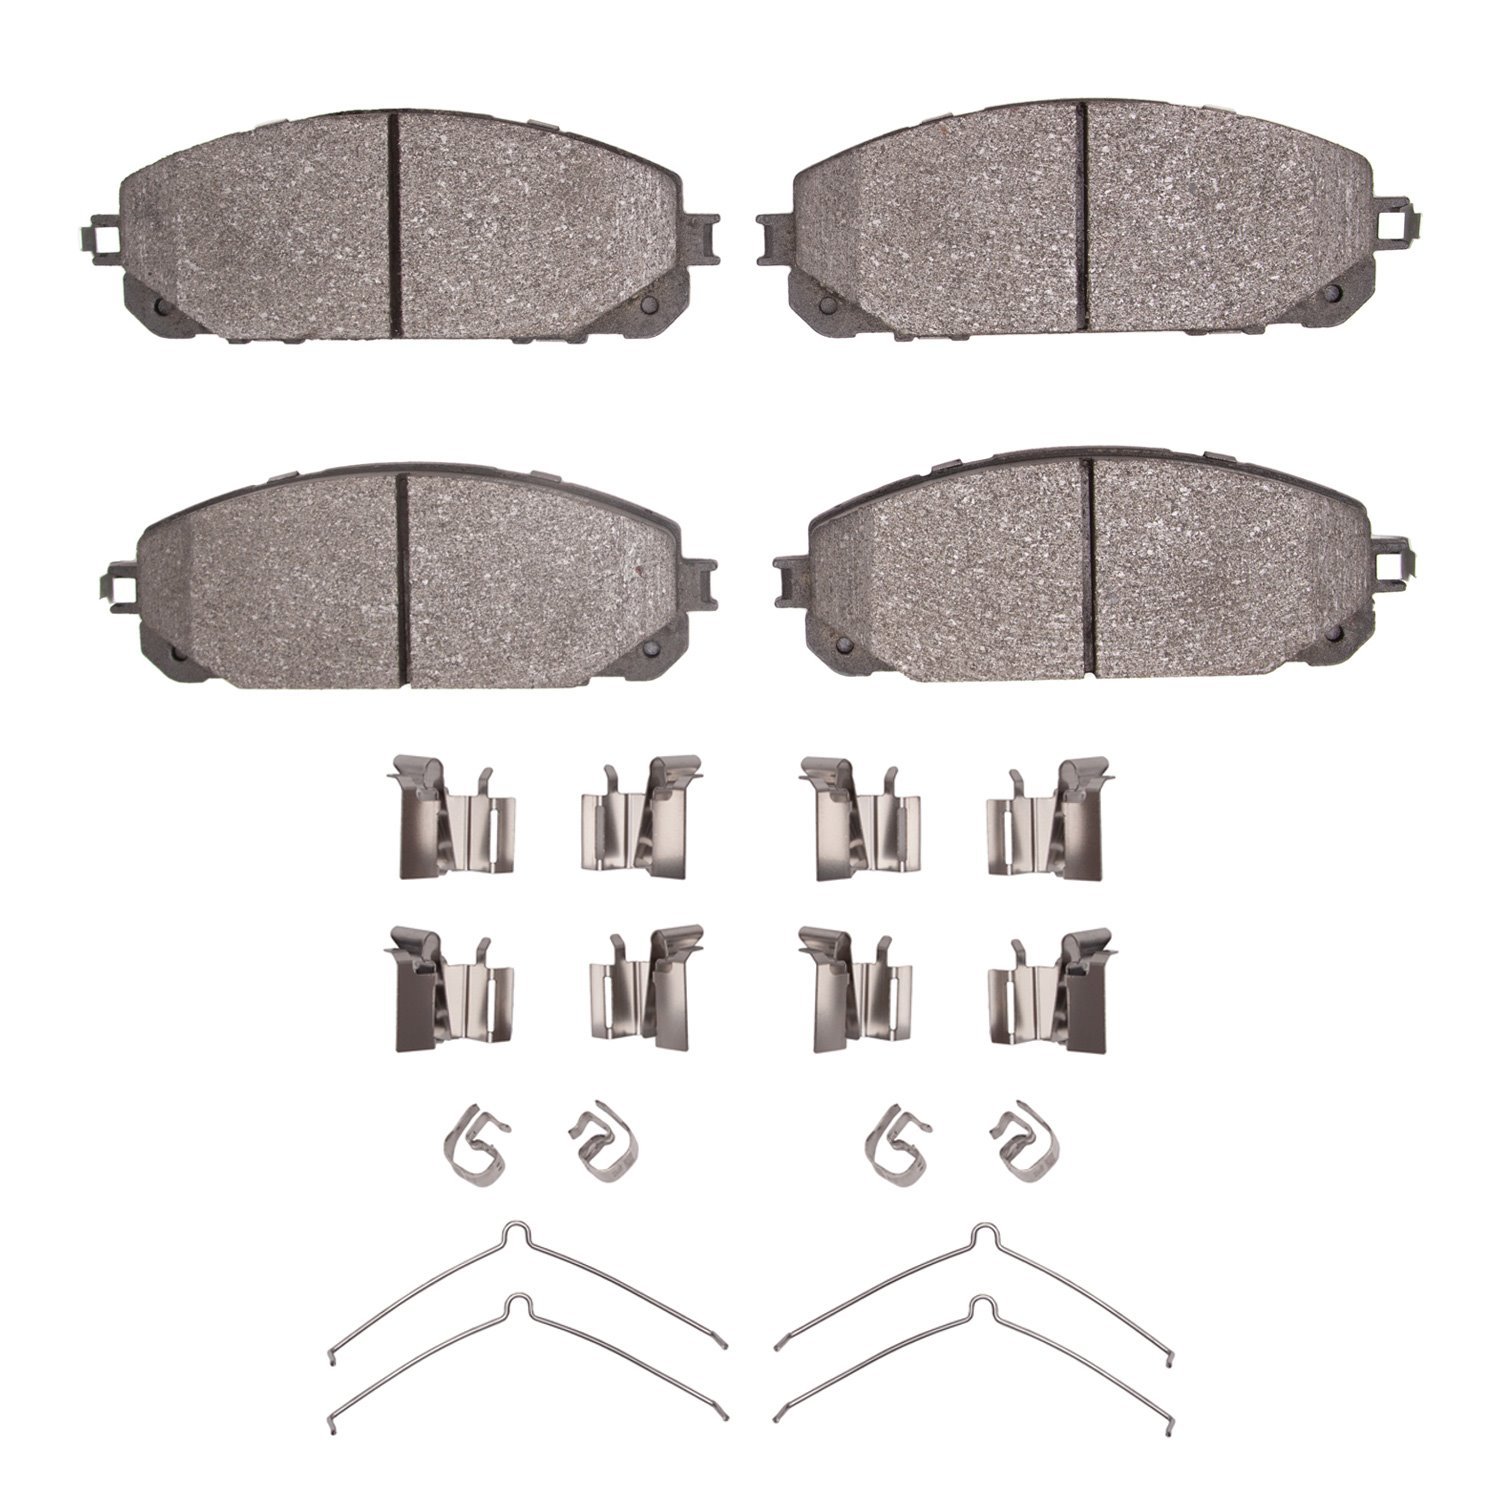 1310-1843-01 3000-Series Ceramic Brake Pads & Hardware Kit, Fits Select Mopar, Position: Front